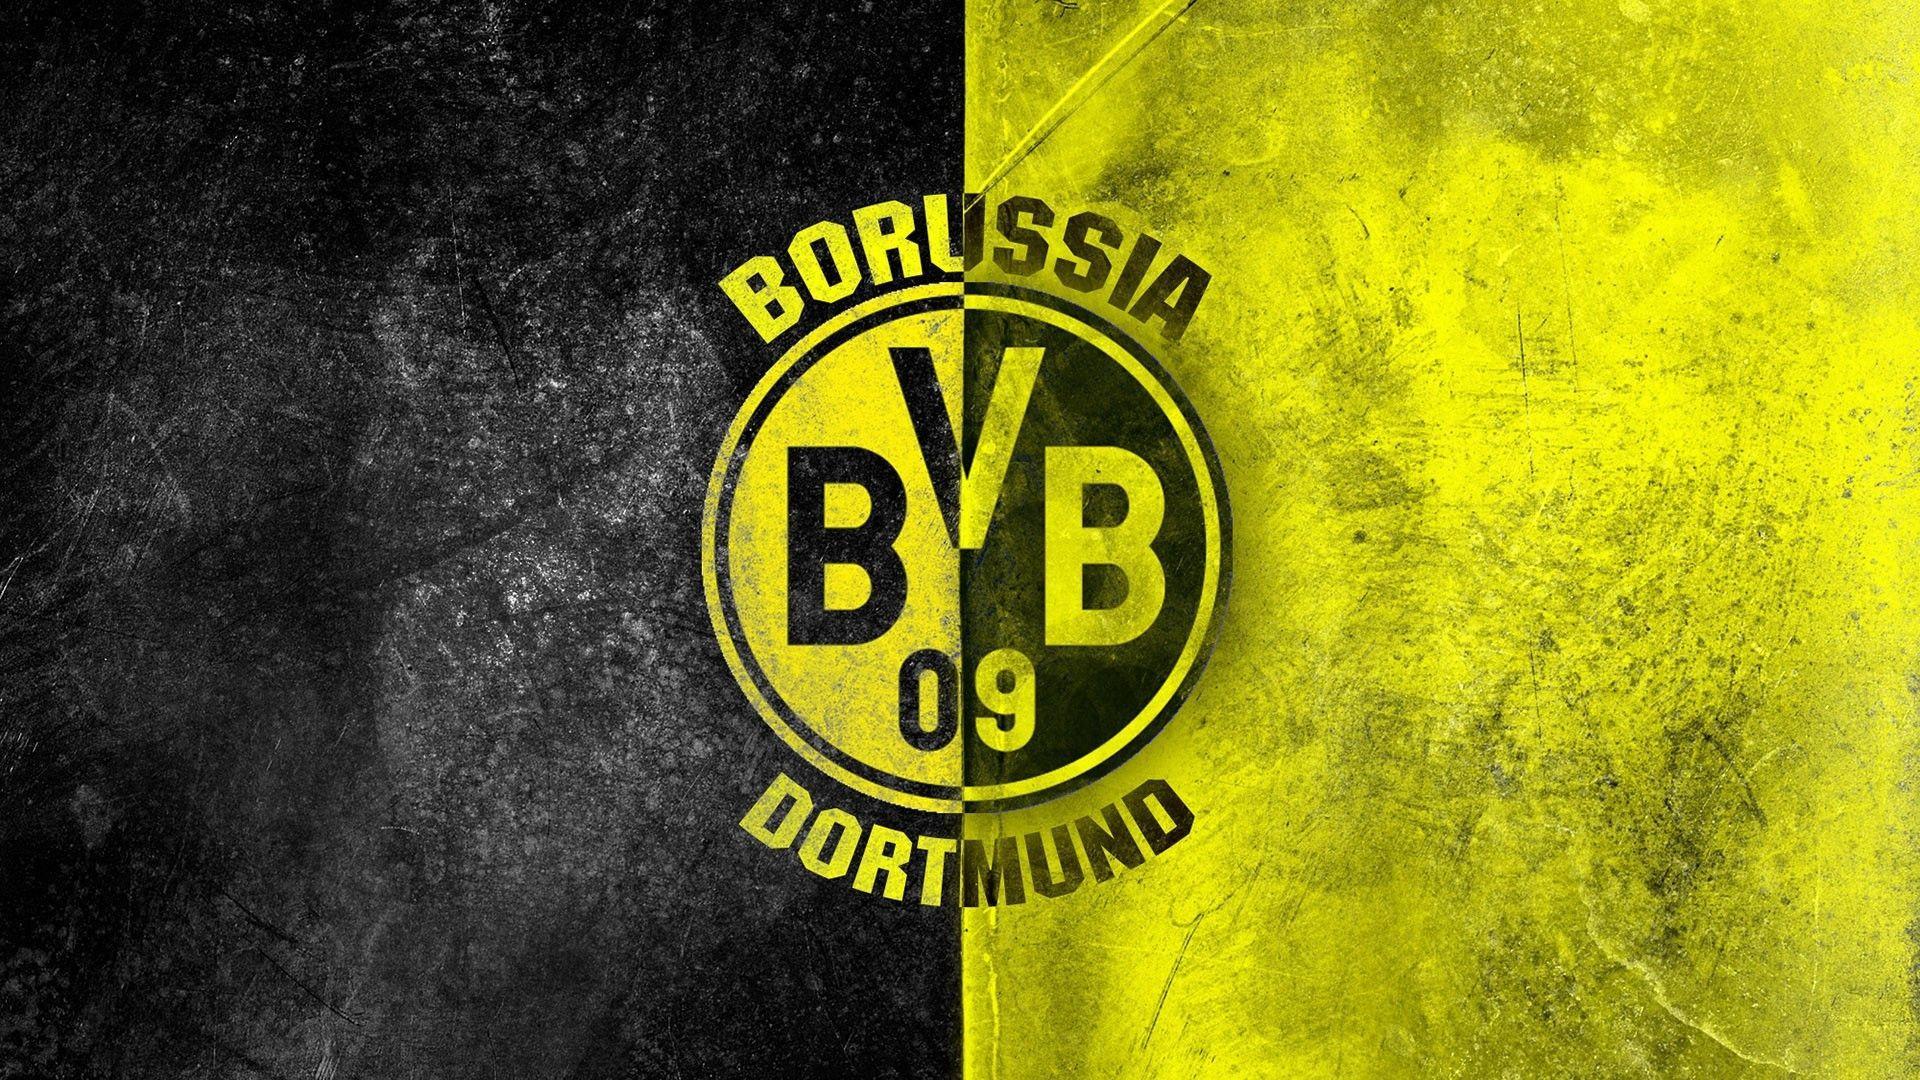 Simply: BVB BVB09 Bundesliga borussia dortmund